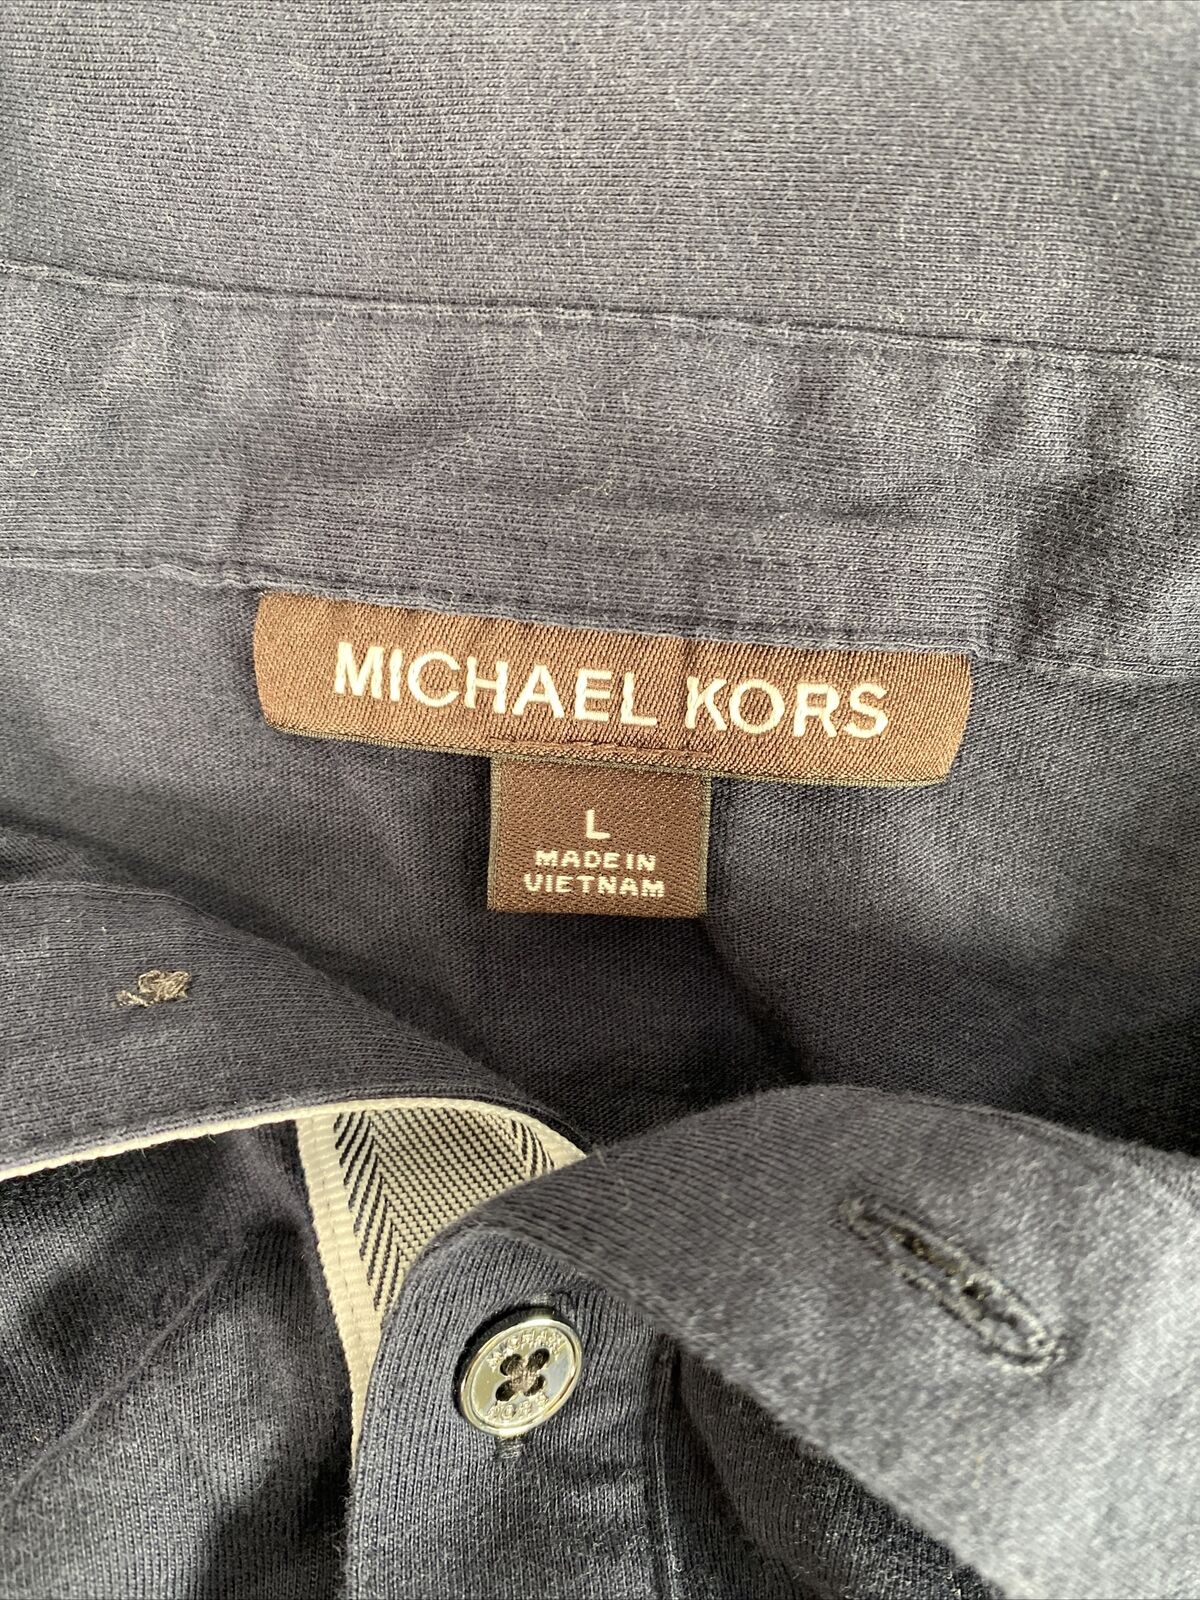 Michael Kors Polo de algodón de manga corta azul para hombre - L